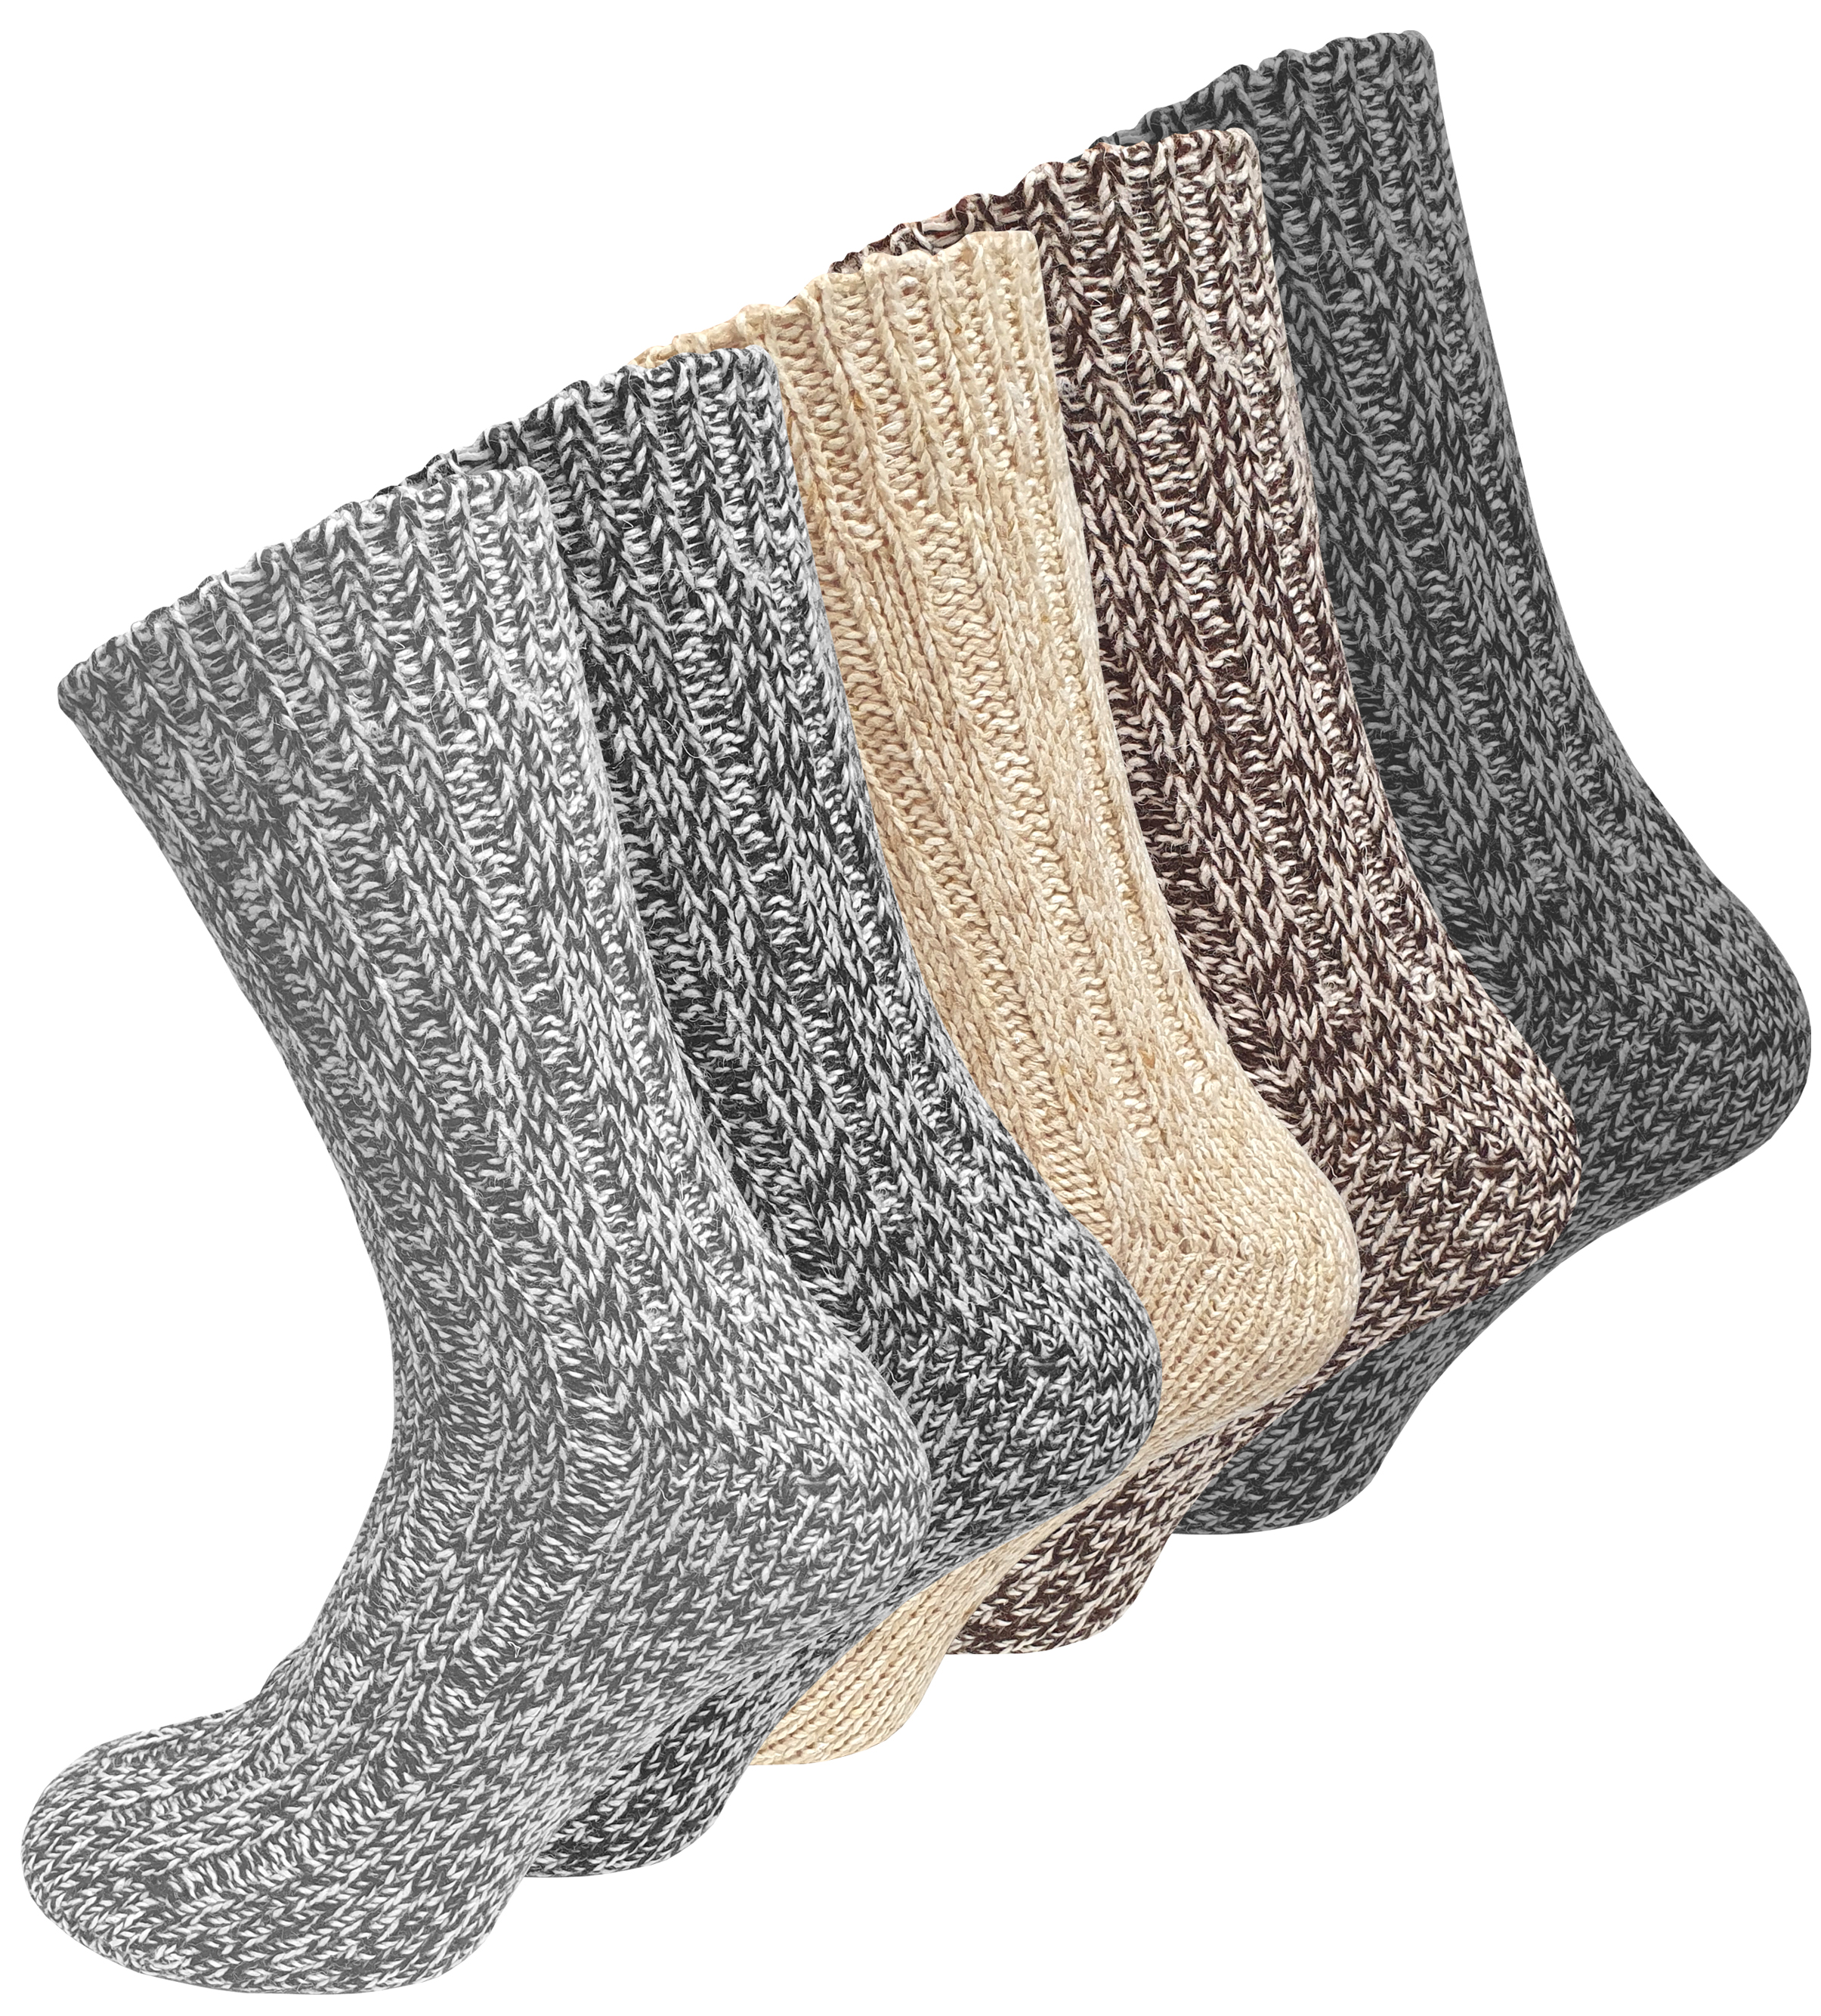 Umschlag-Söckchen Wollsocken mit Alpakawolle Norwegersocken warme Socken 2 Paar 